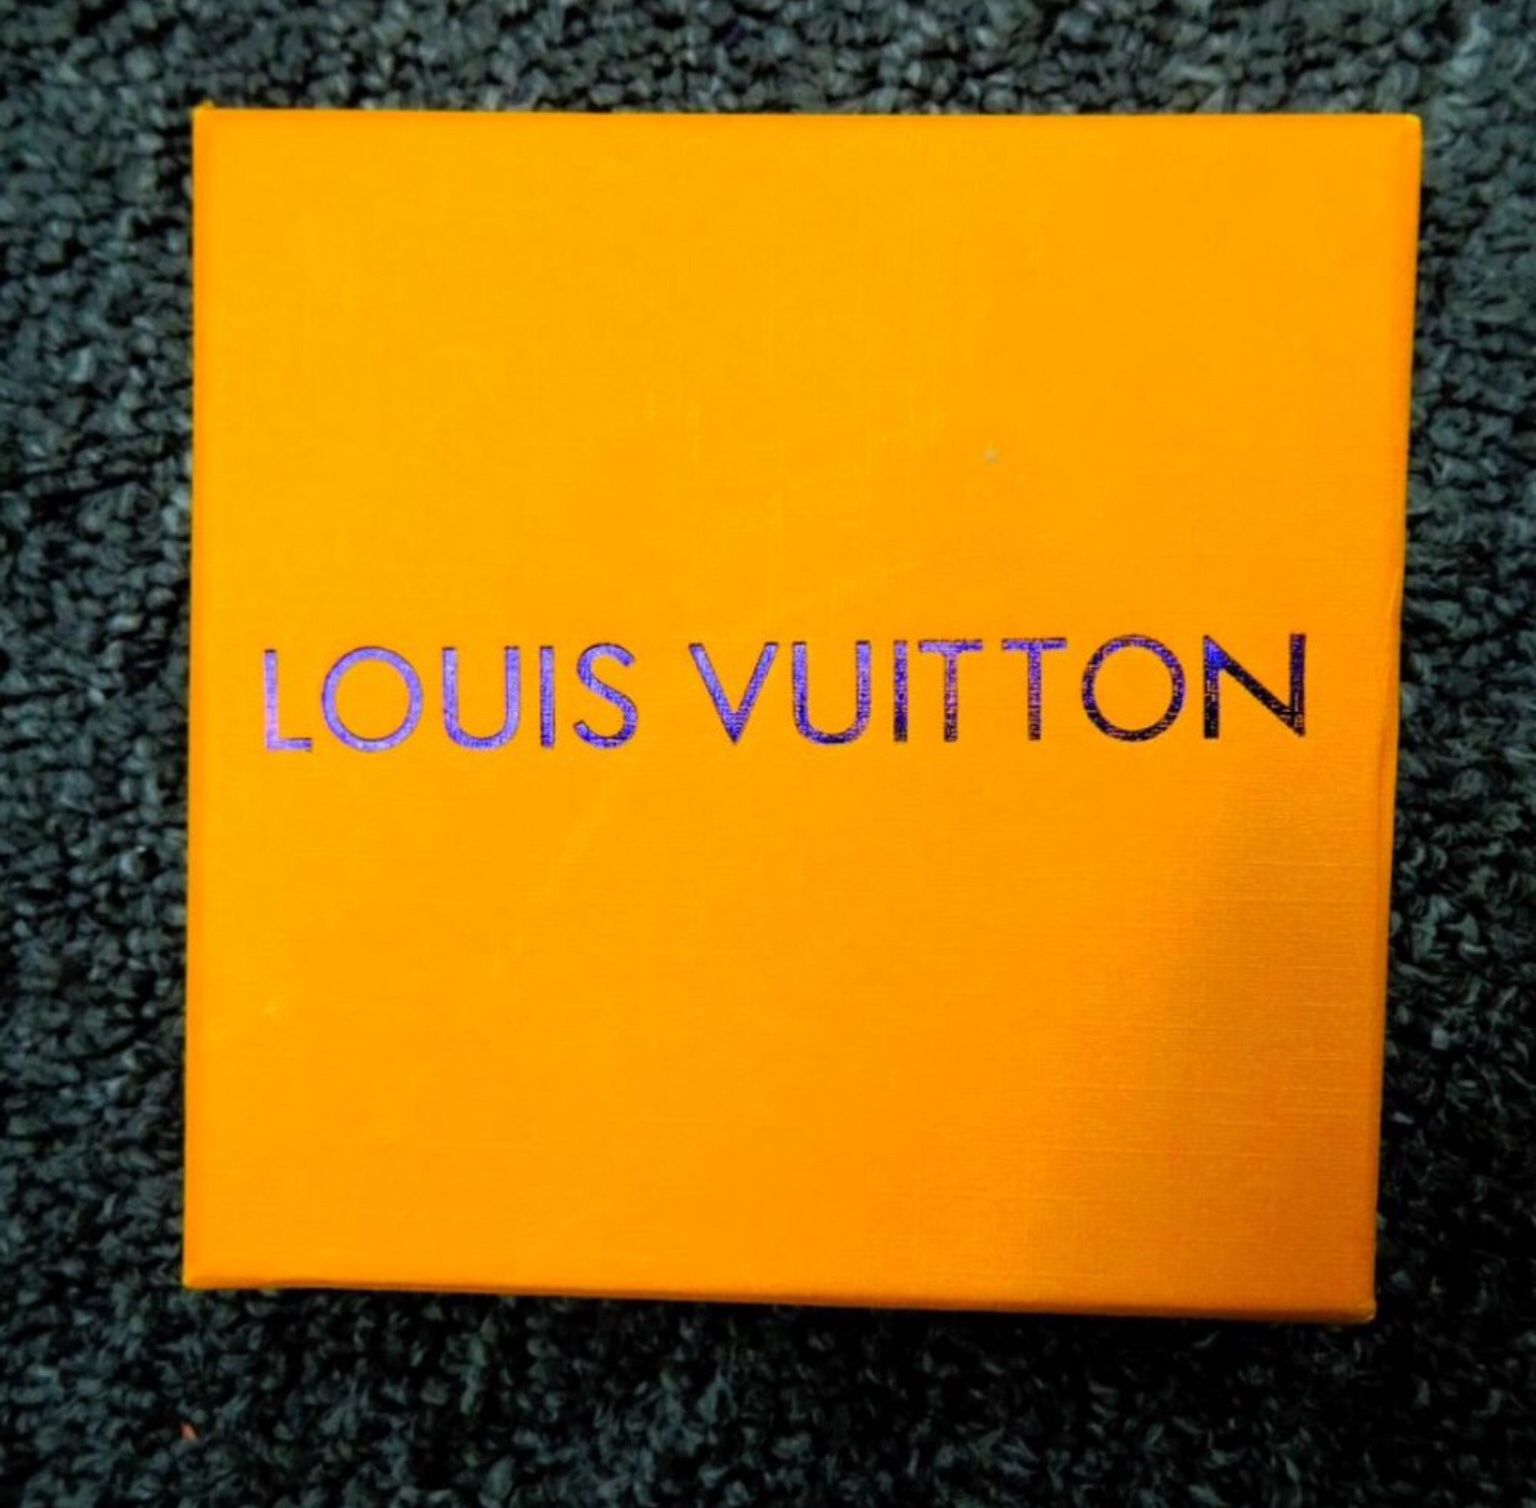 Louis Vuitton Empty Boxes (billerica) $29